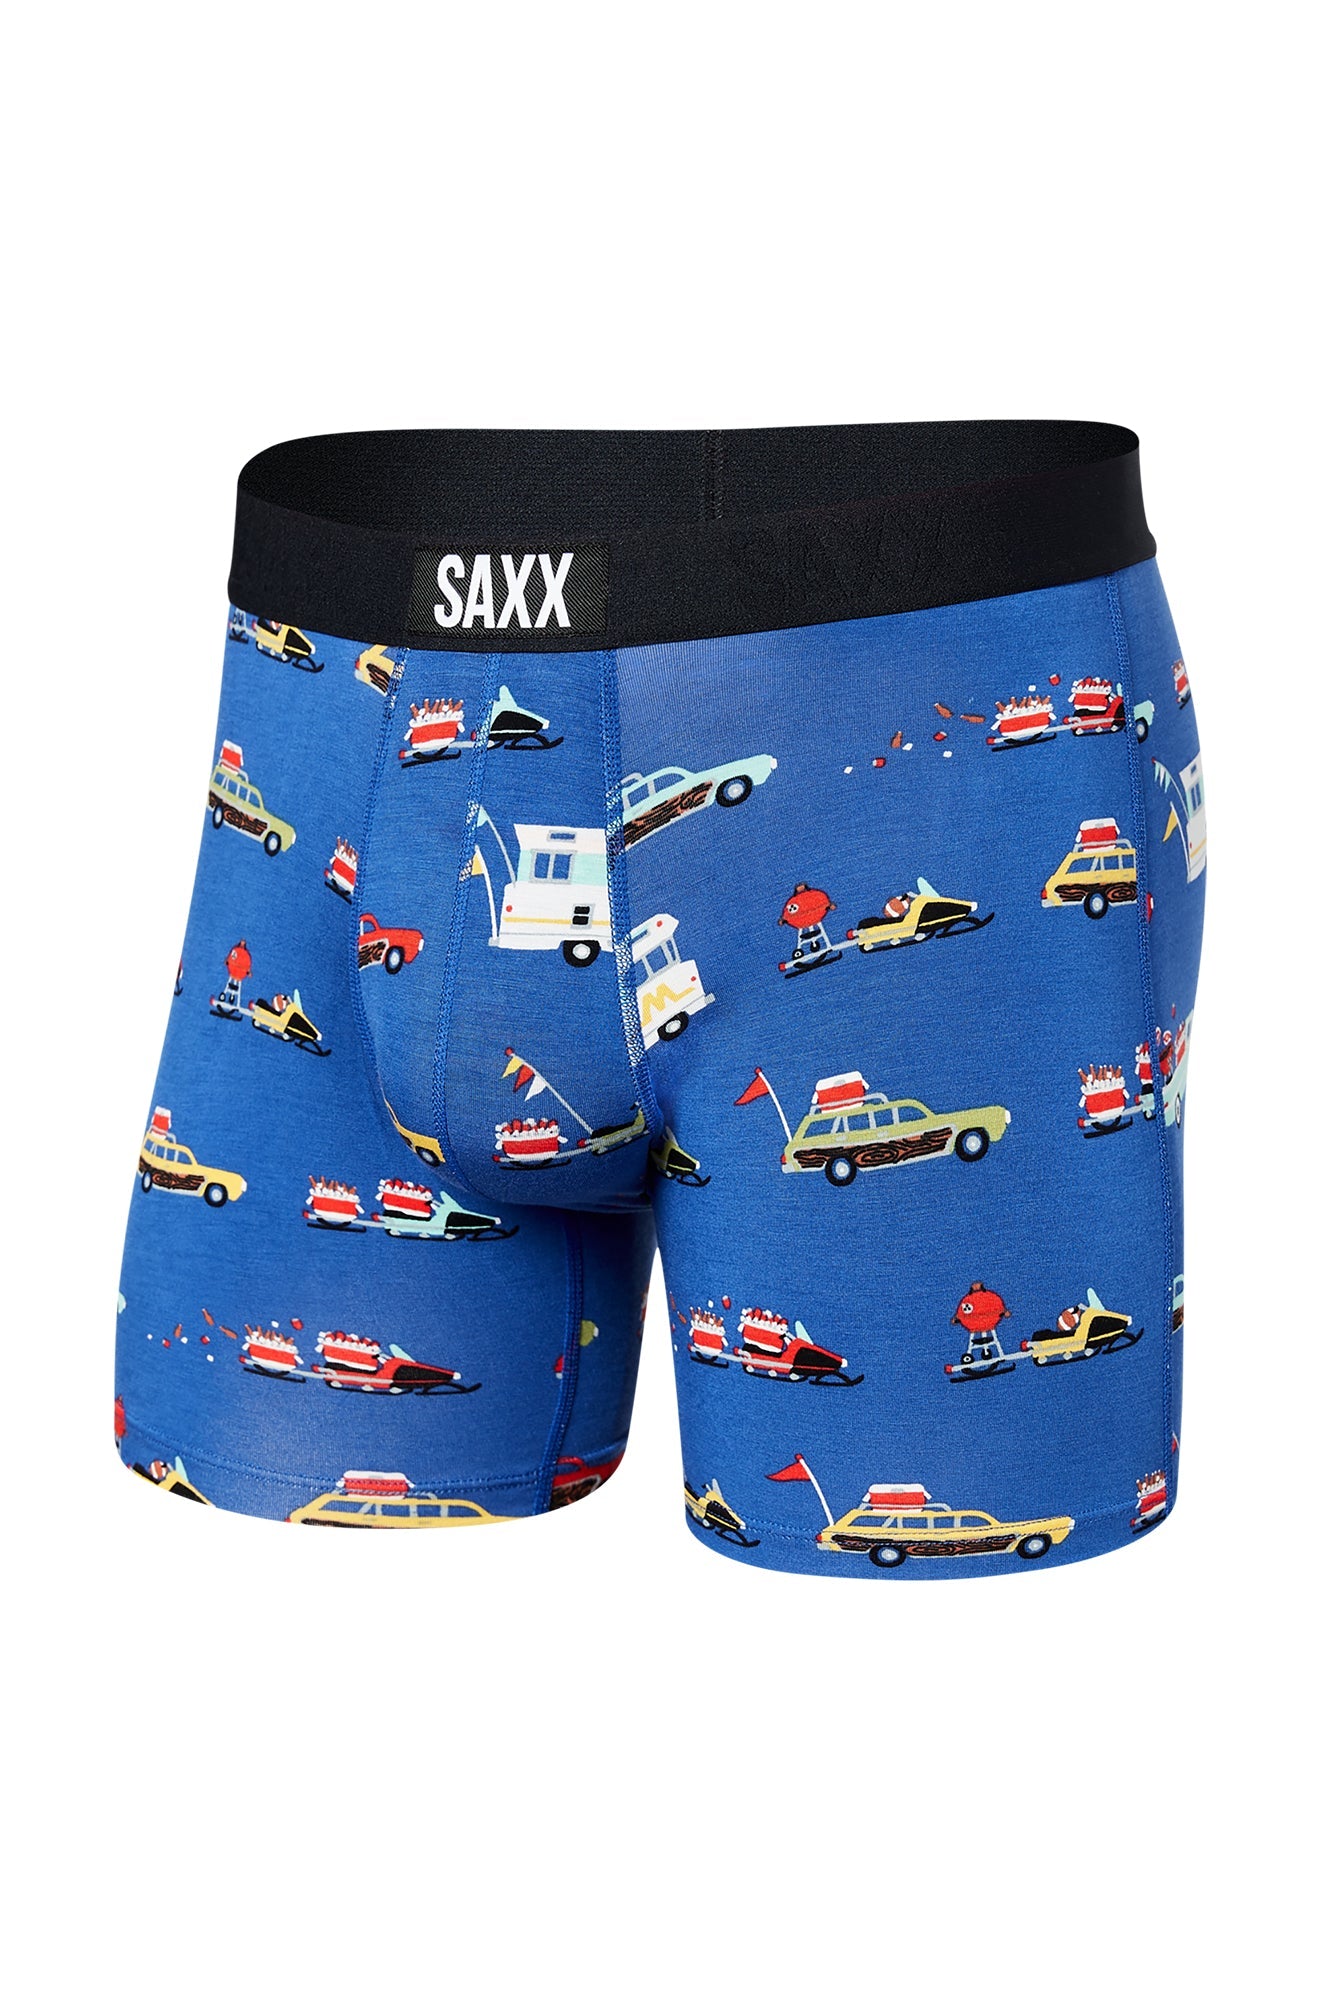 Men's underwear/boxer by Saxx, SXBM35 TBB